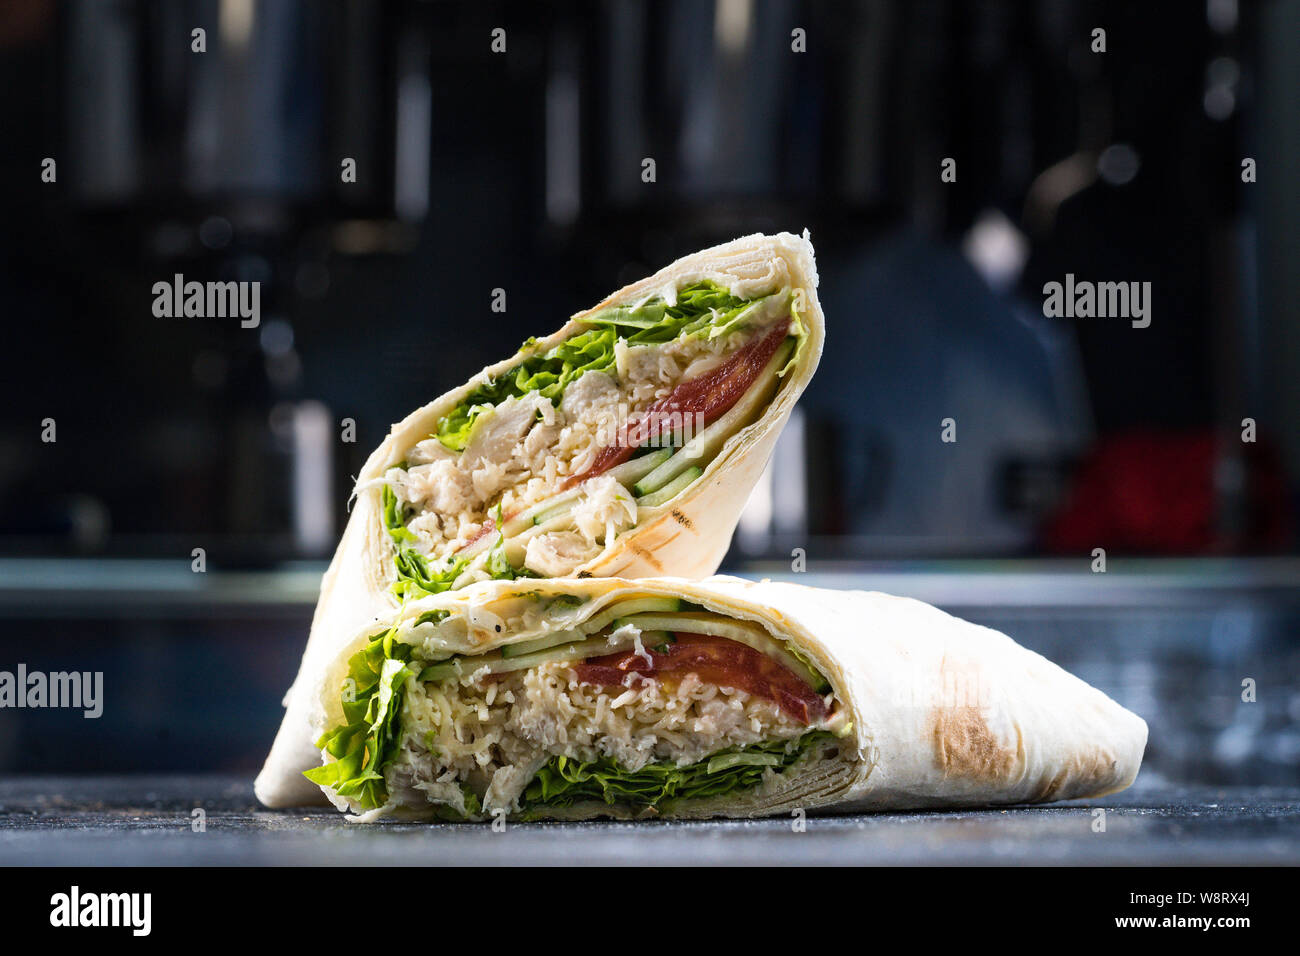 Shawarma sandwich Gyro frische Rolle Lavash Fladenbrot Huhn Rind shawarma  falafel RecipeTin Eatsfilled mit gegrilltem Fleisch, Pilzen, Käse. Tradit  Stockfotografie - Alamy